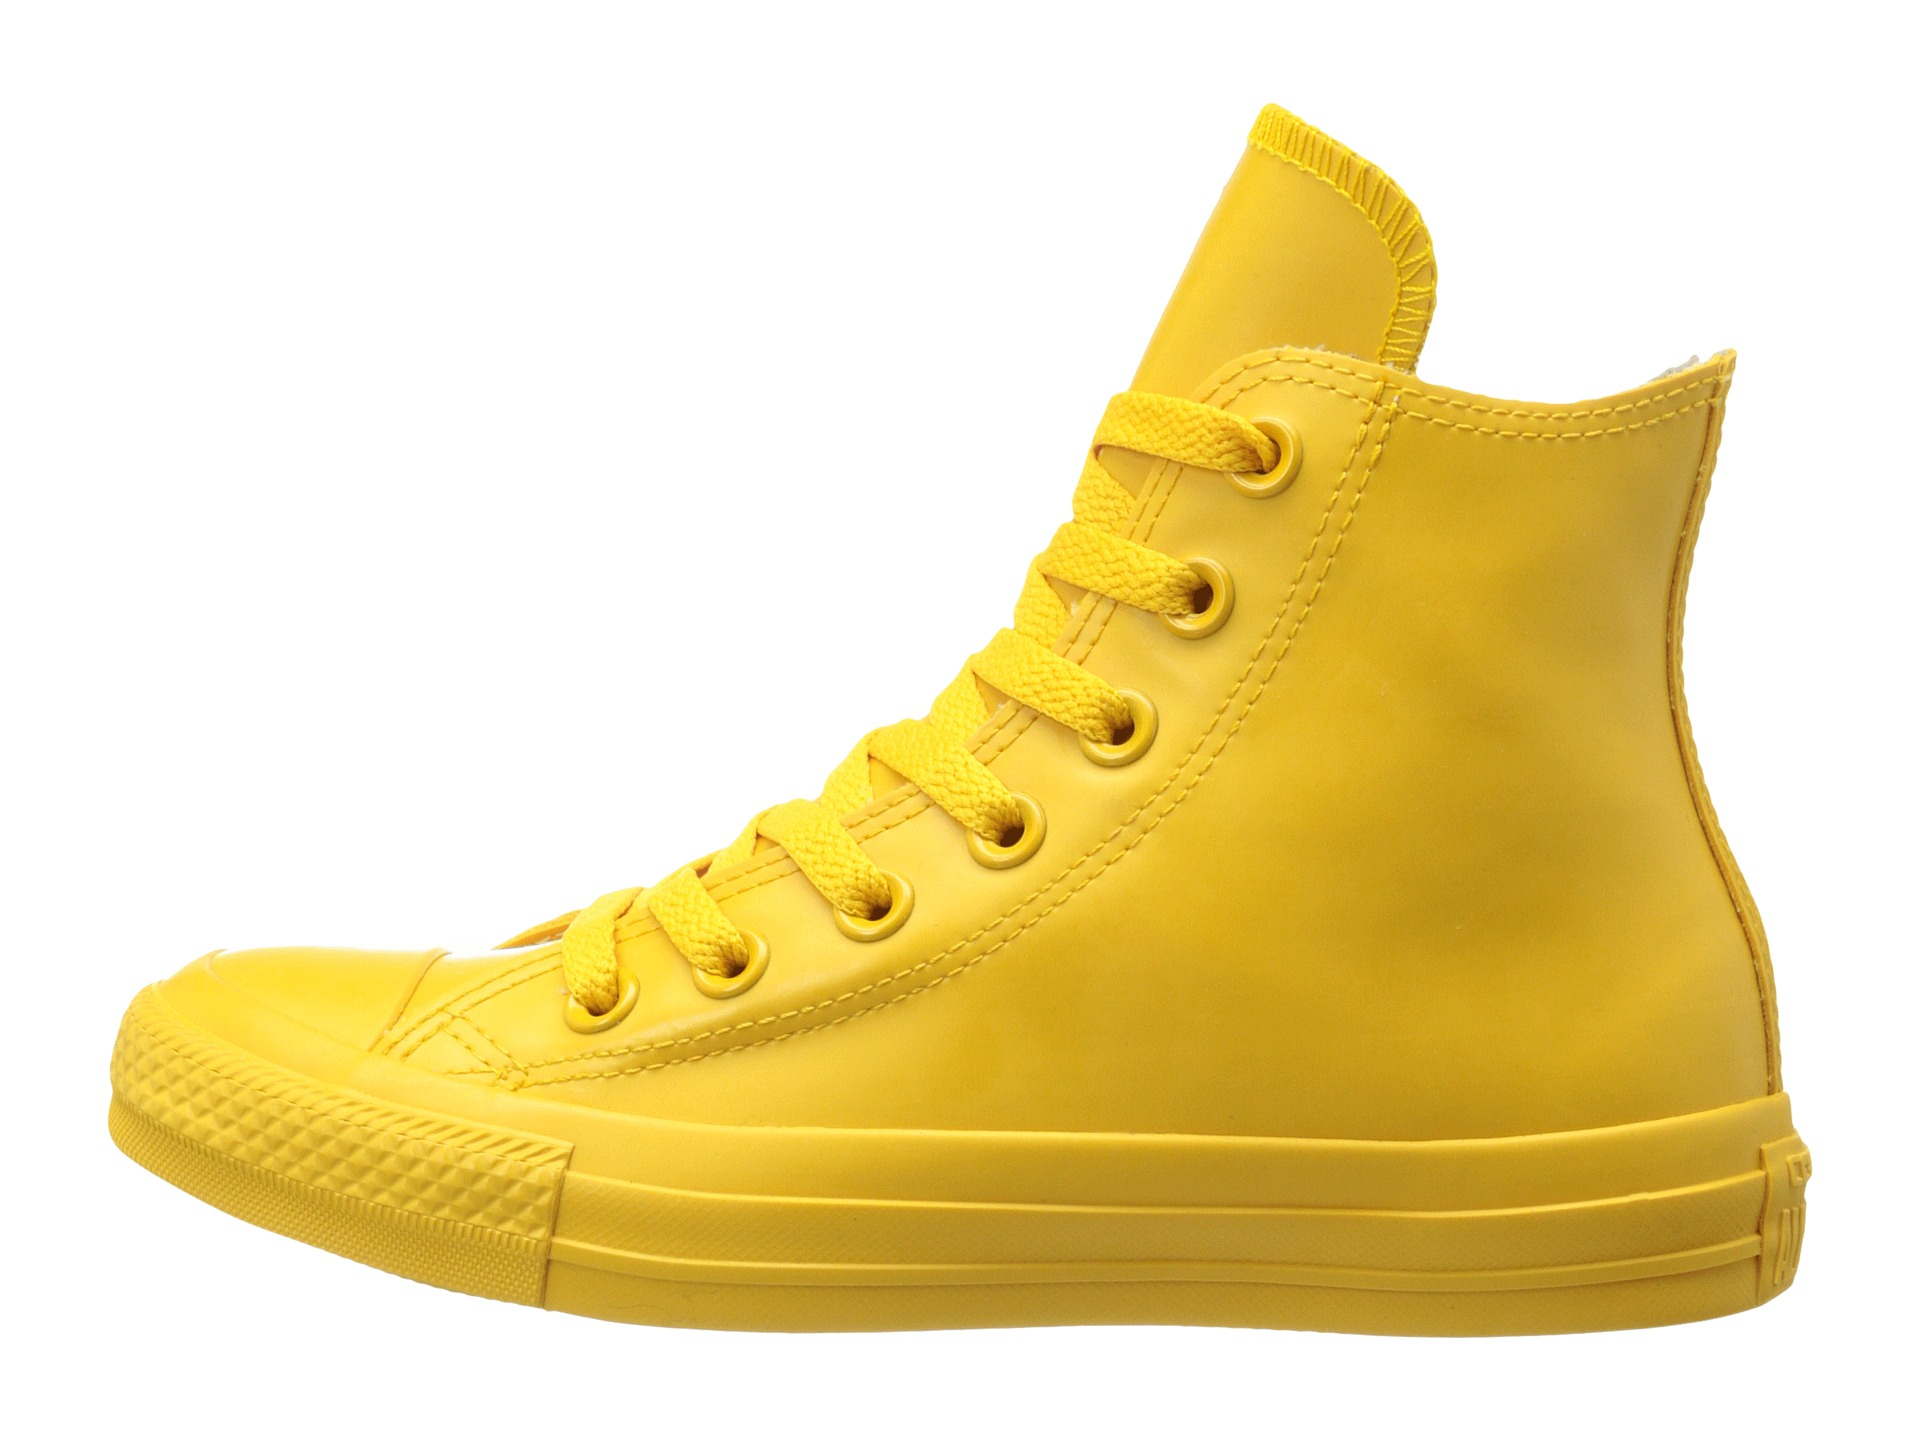 converse chuck taylor rubber yellow